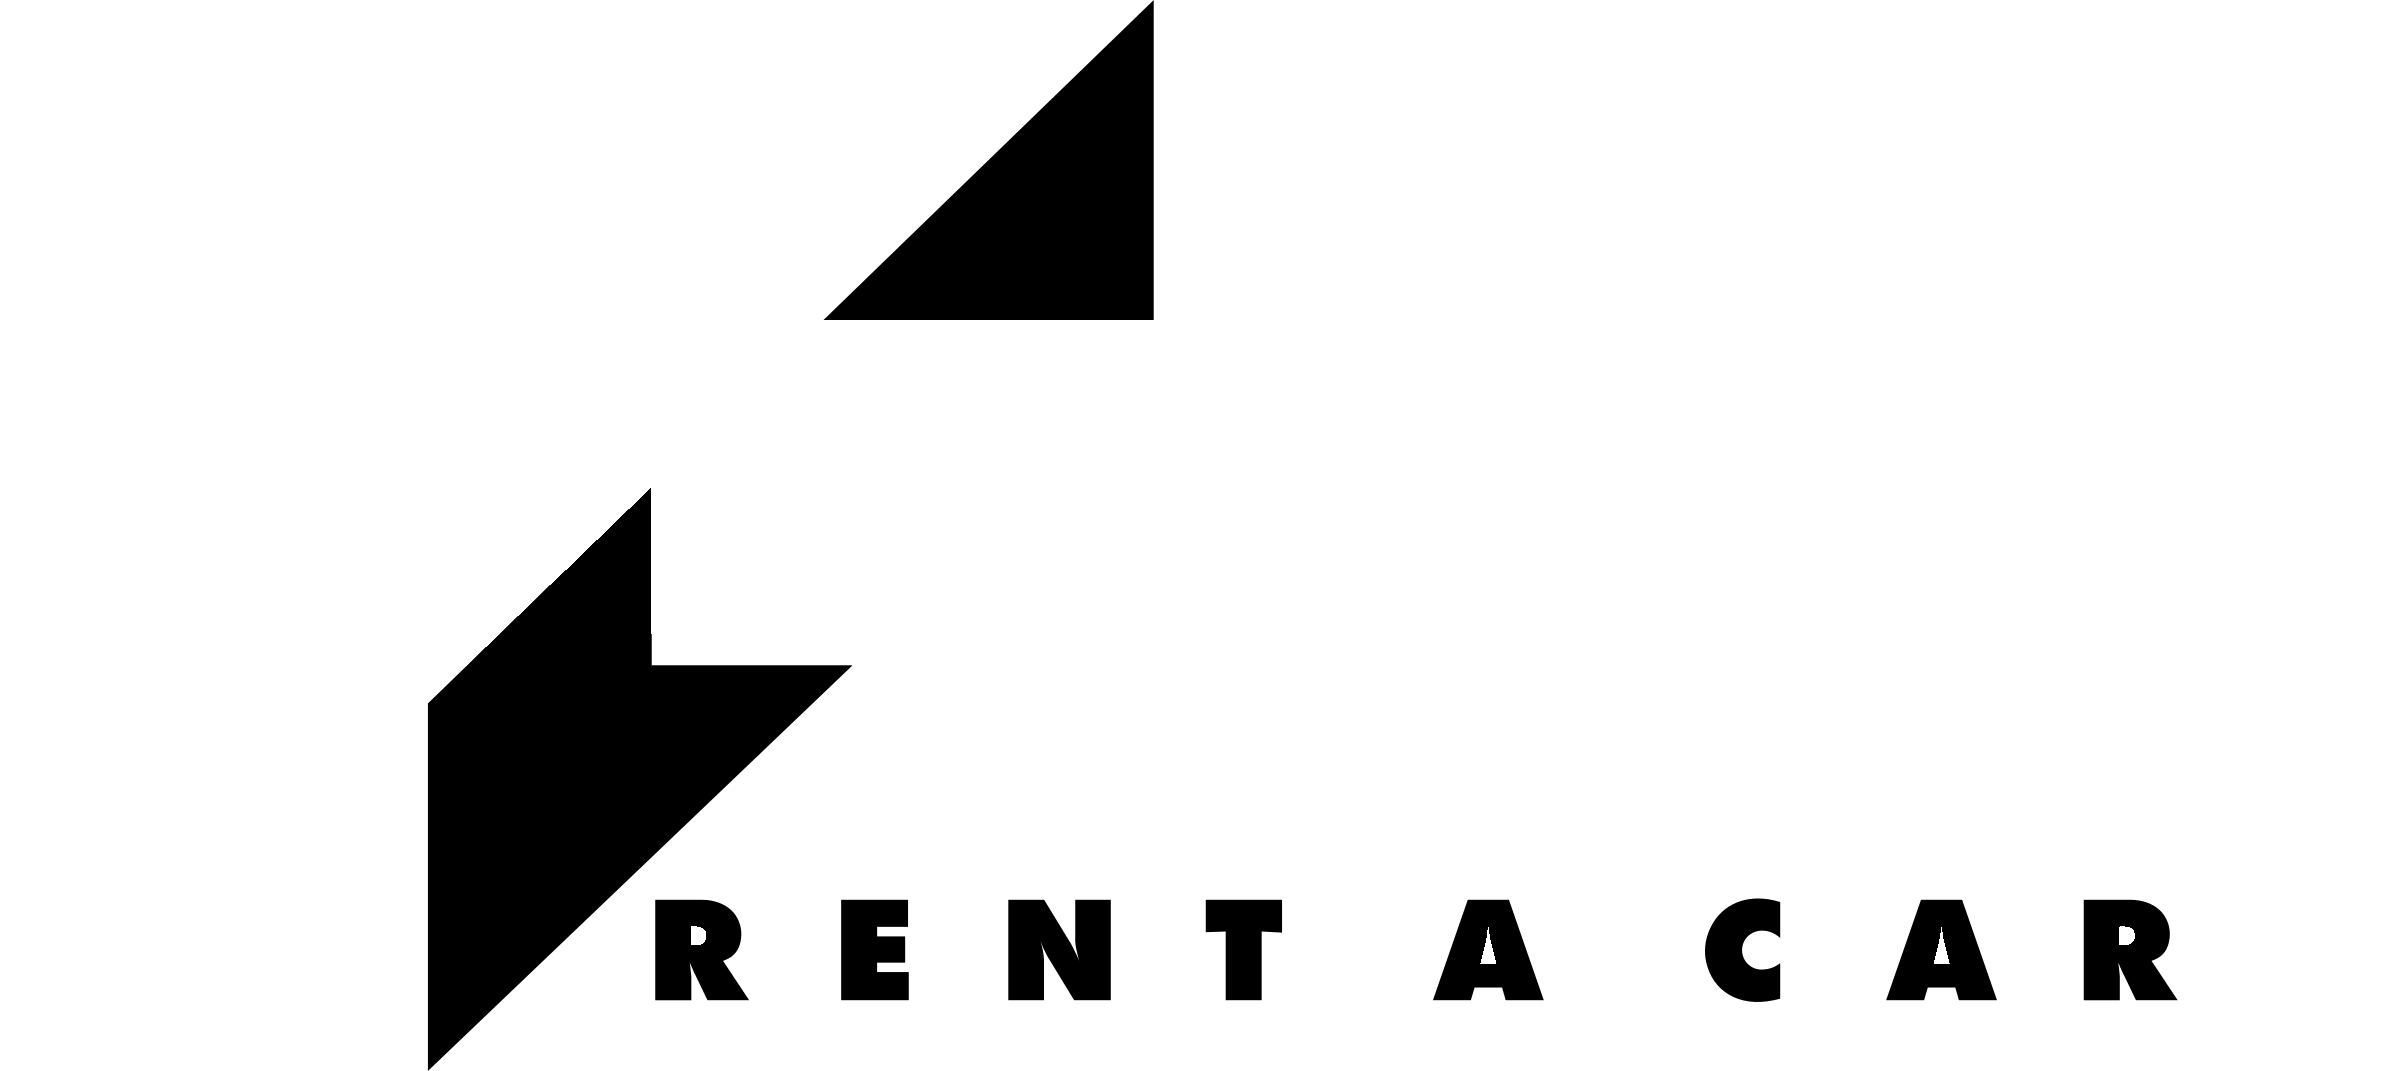 Dollar Rent a Car Logo - Dollar Rent A Car Logo PNG Transparent & SVG Vector